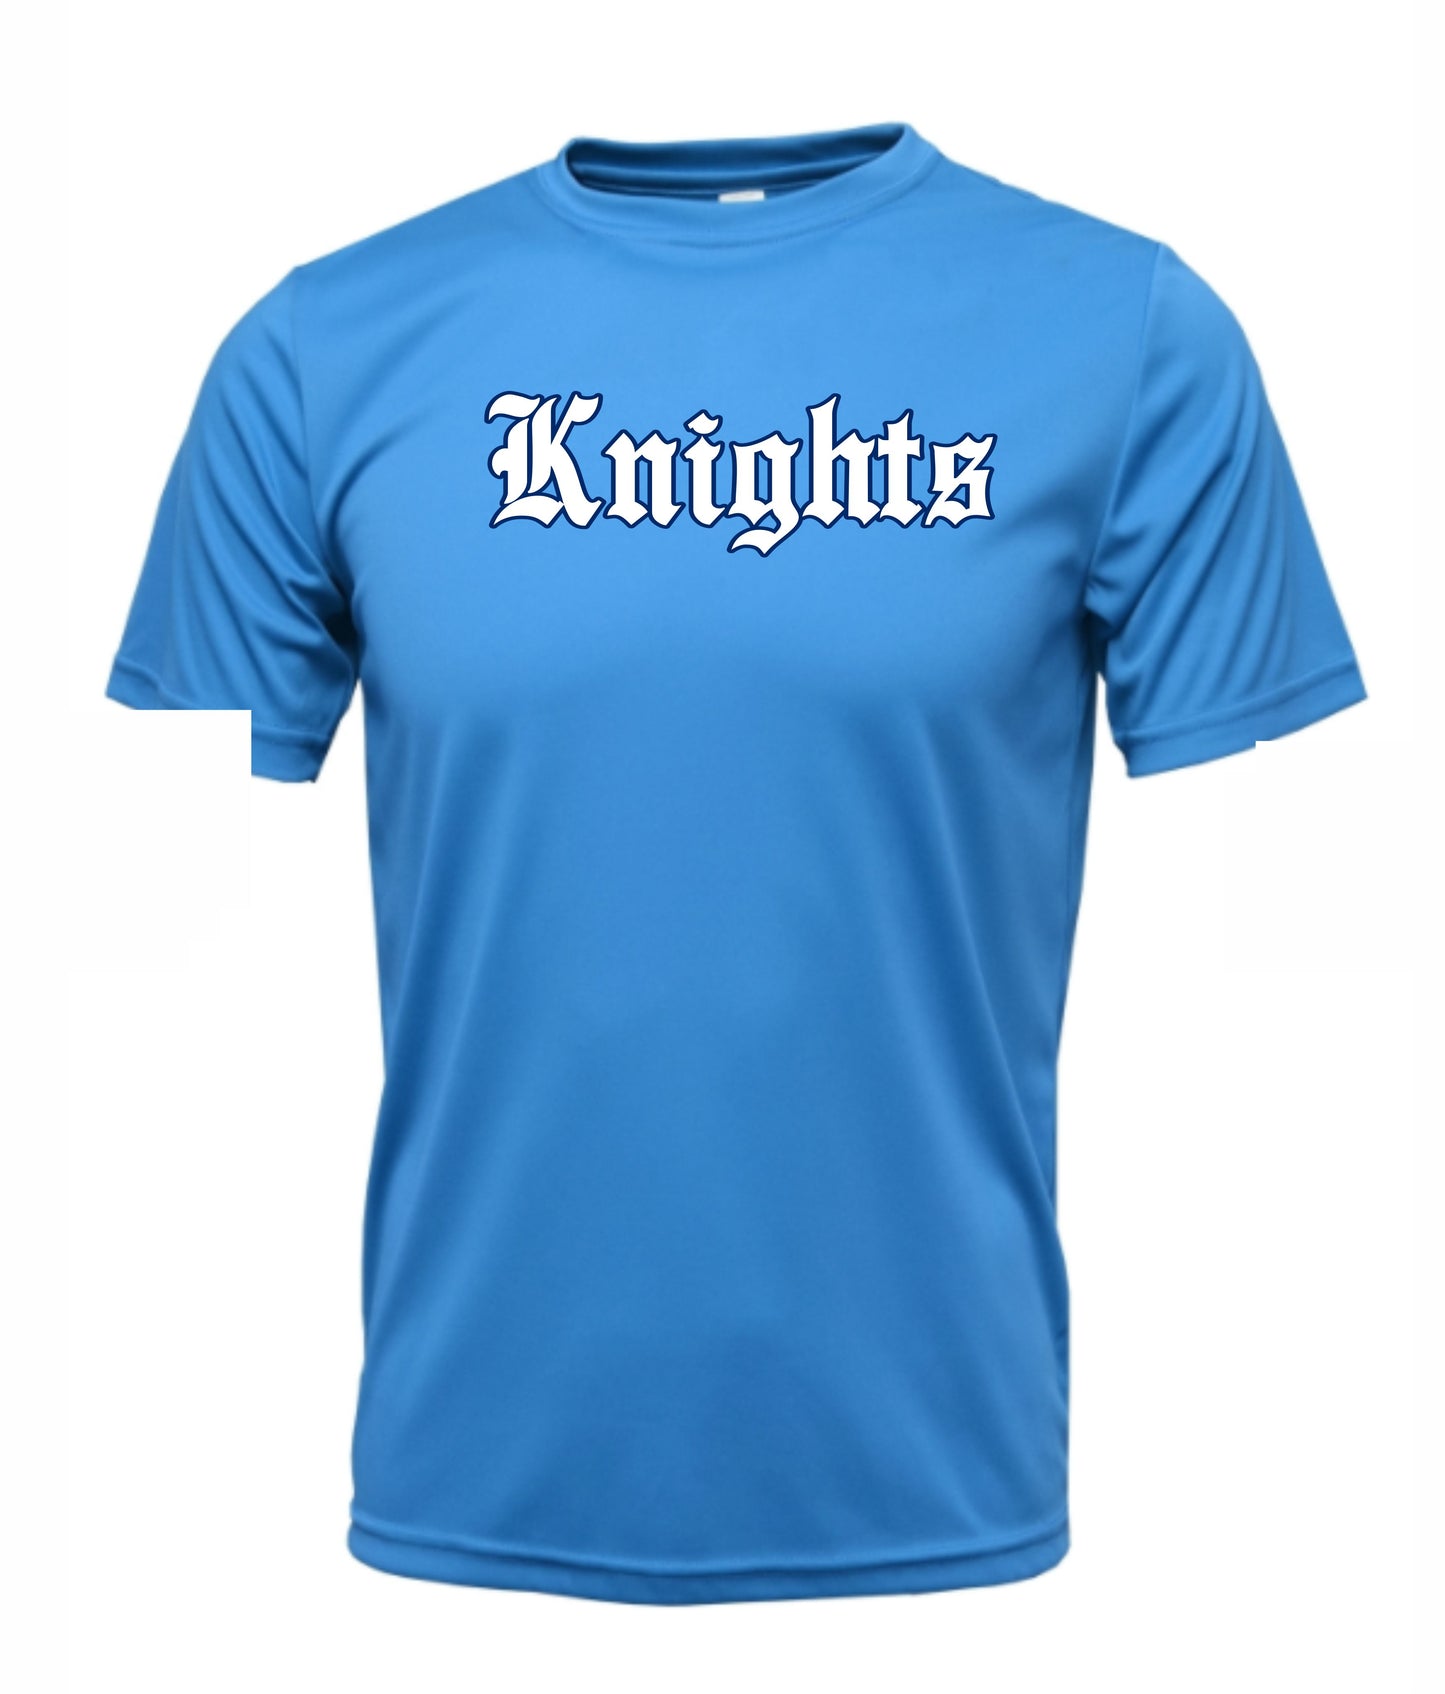 Knights Cotton T-shirt